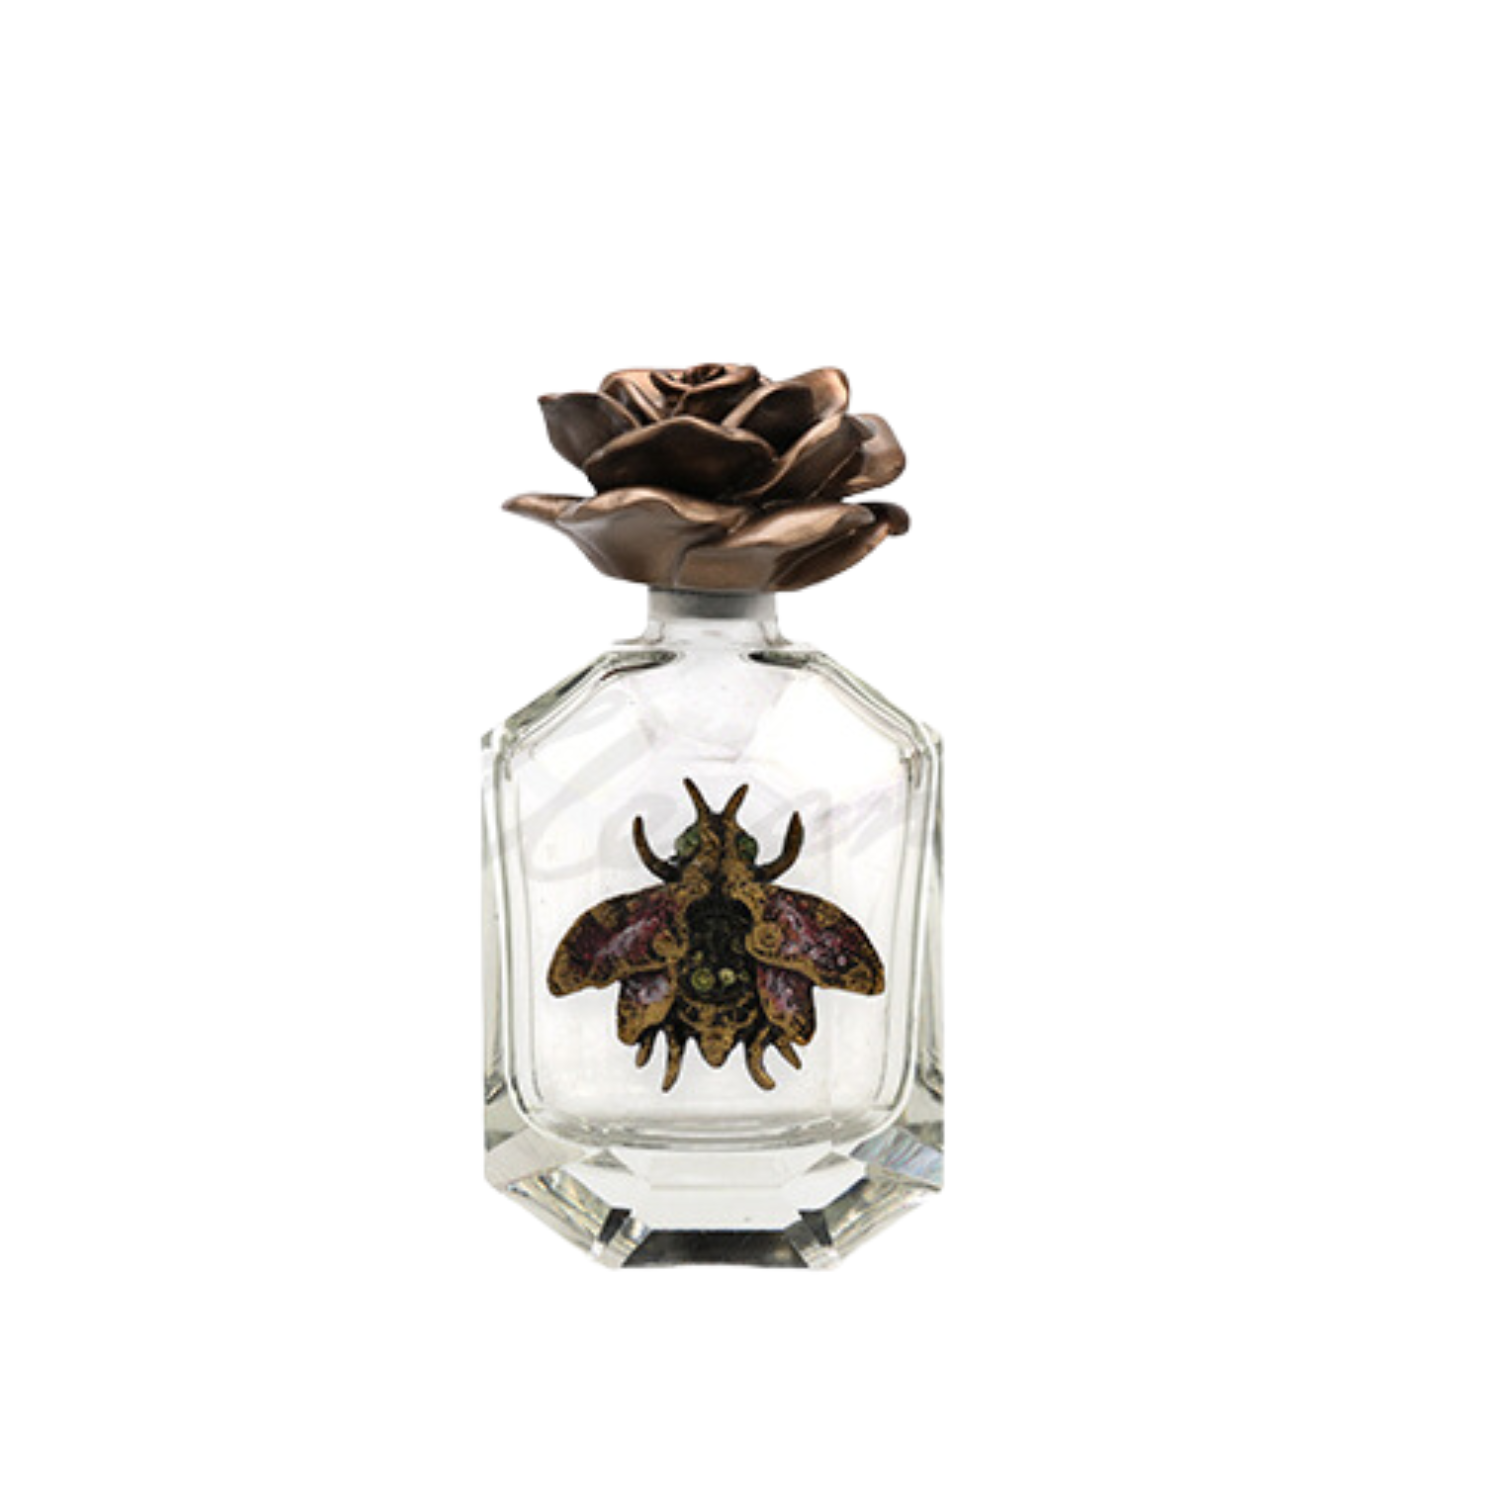 Bumblebee Perfume Bottle with Flower Lid